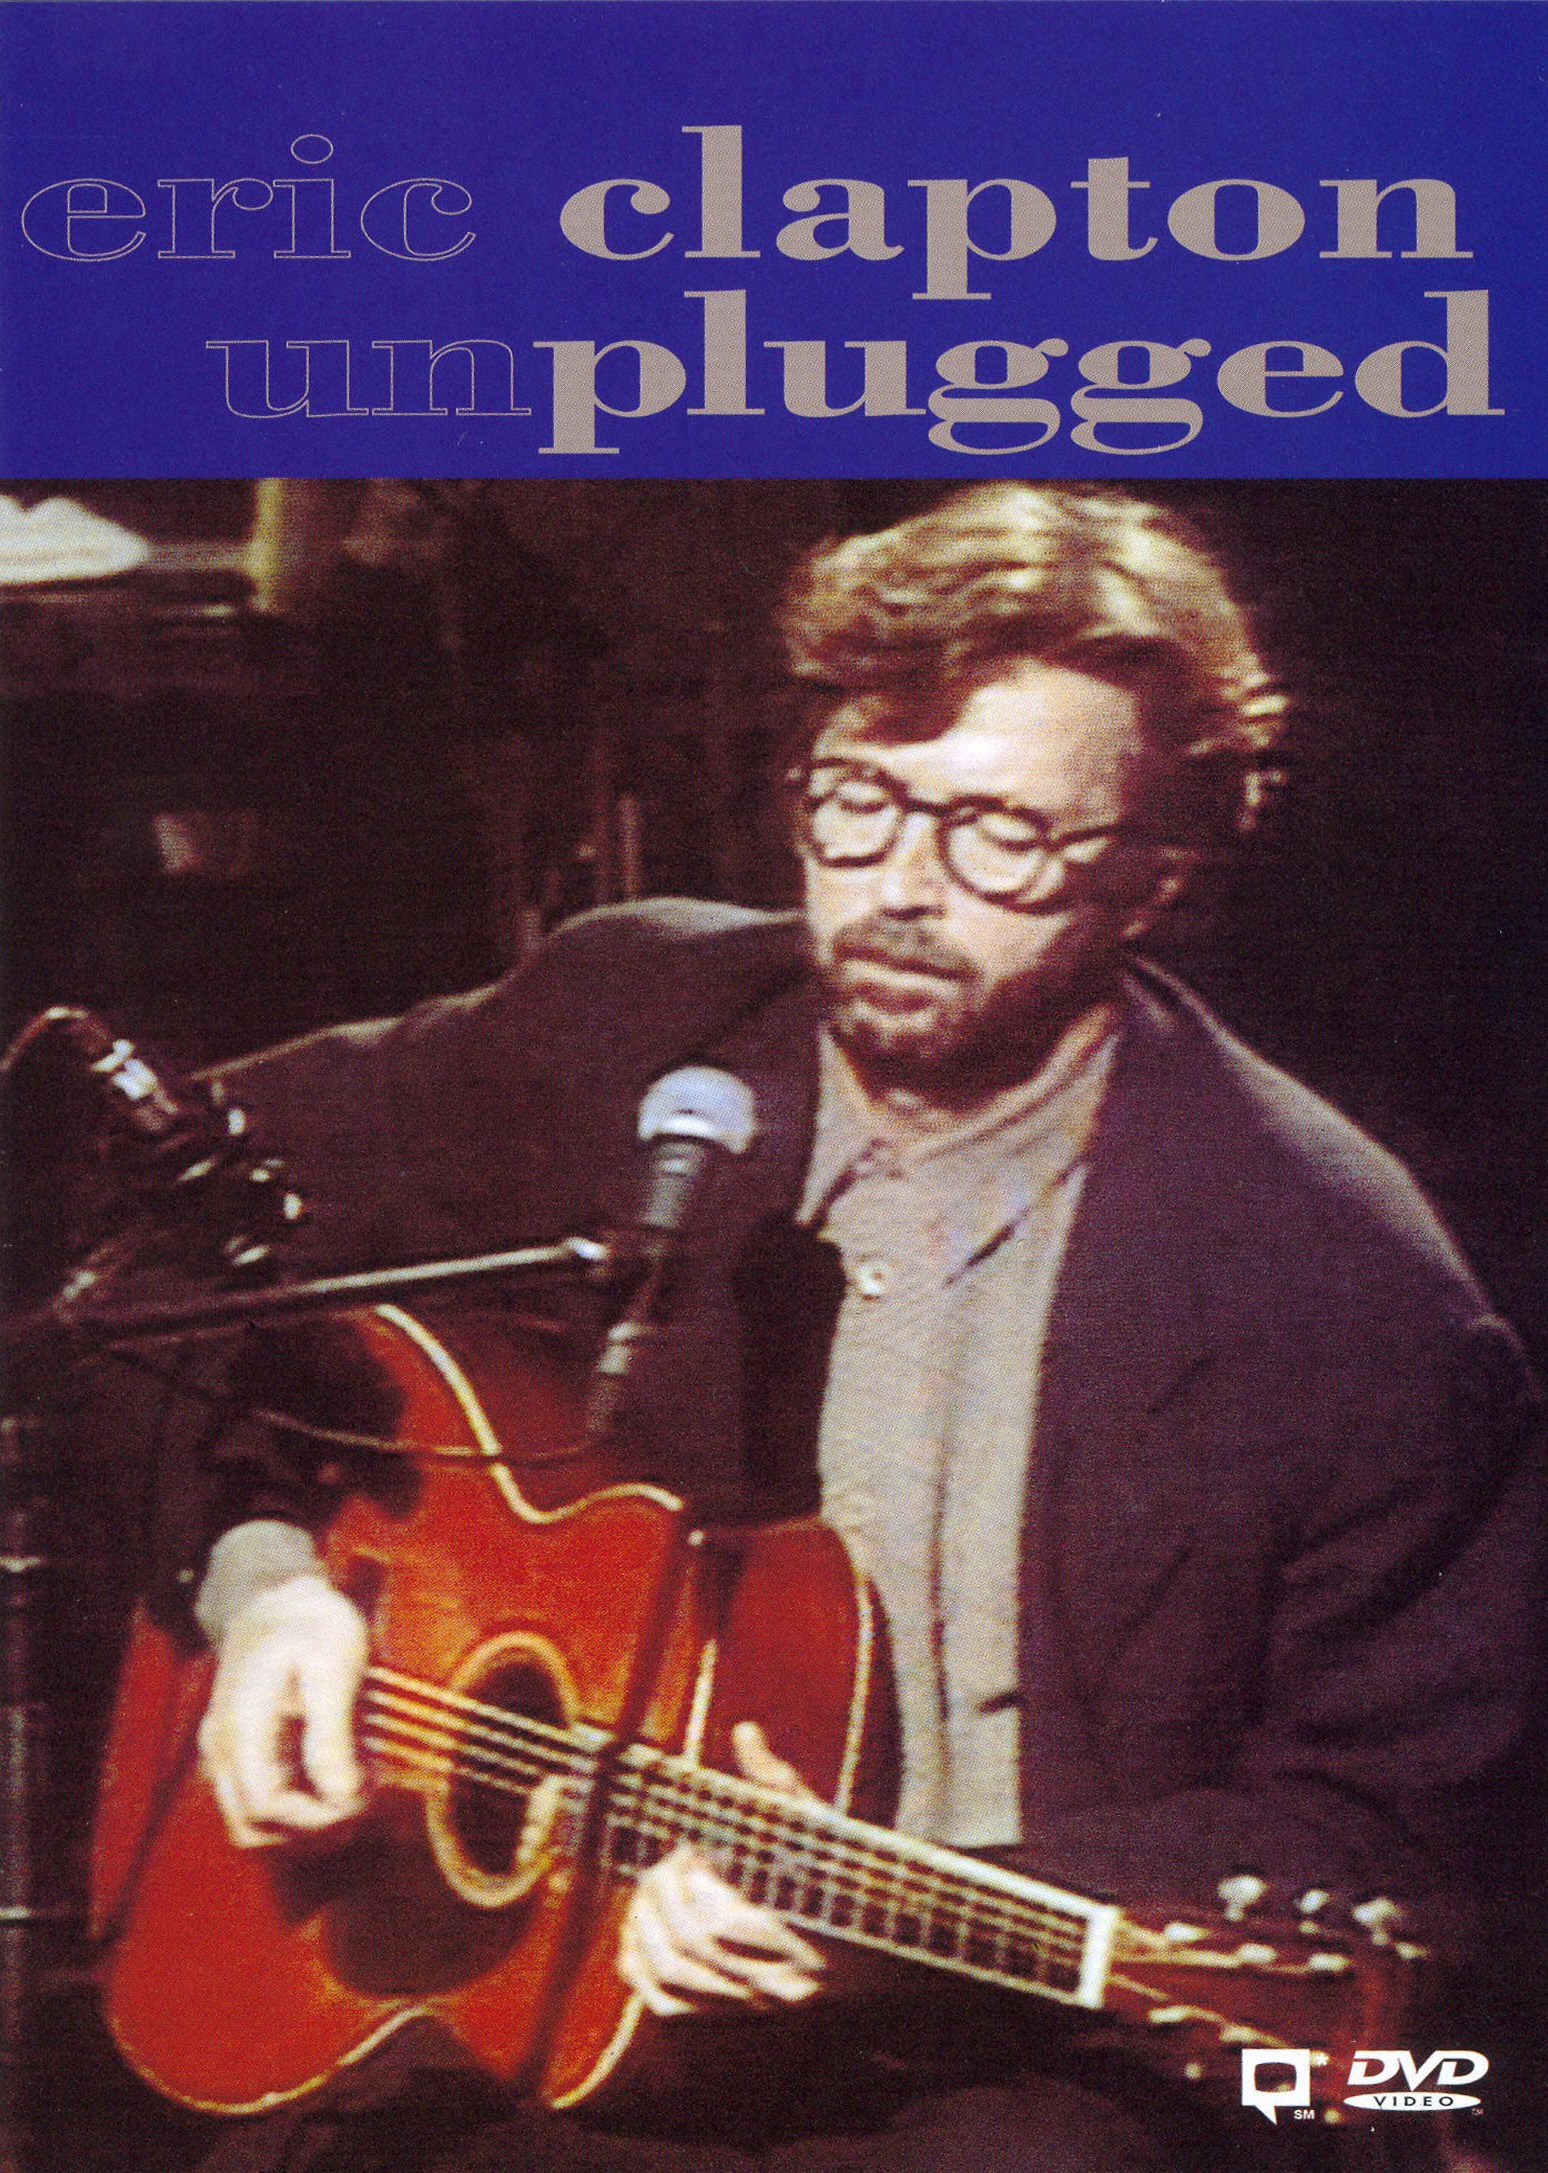 Eric Clapton - MTV Unplugged - Eric Clapton - MTV Unplugged - Front.jpg